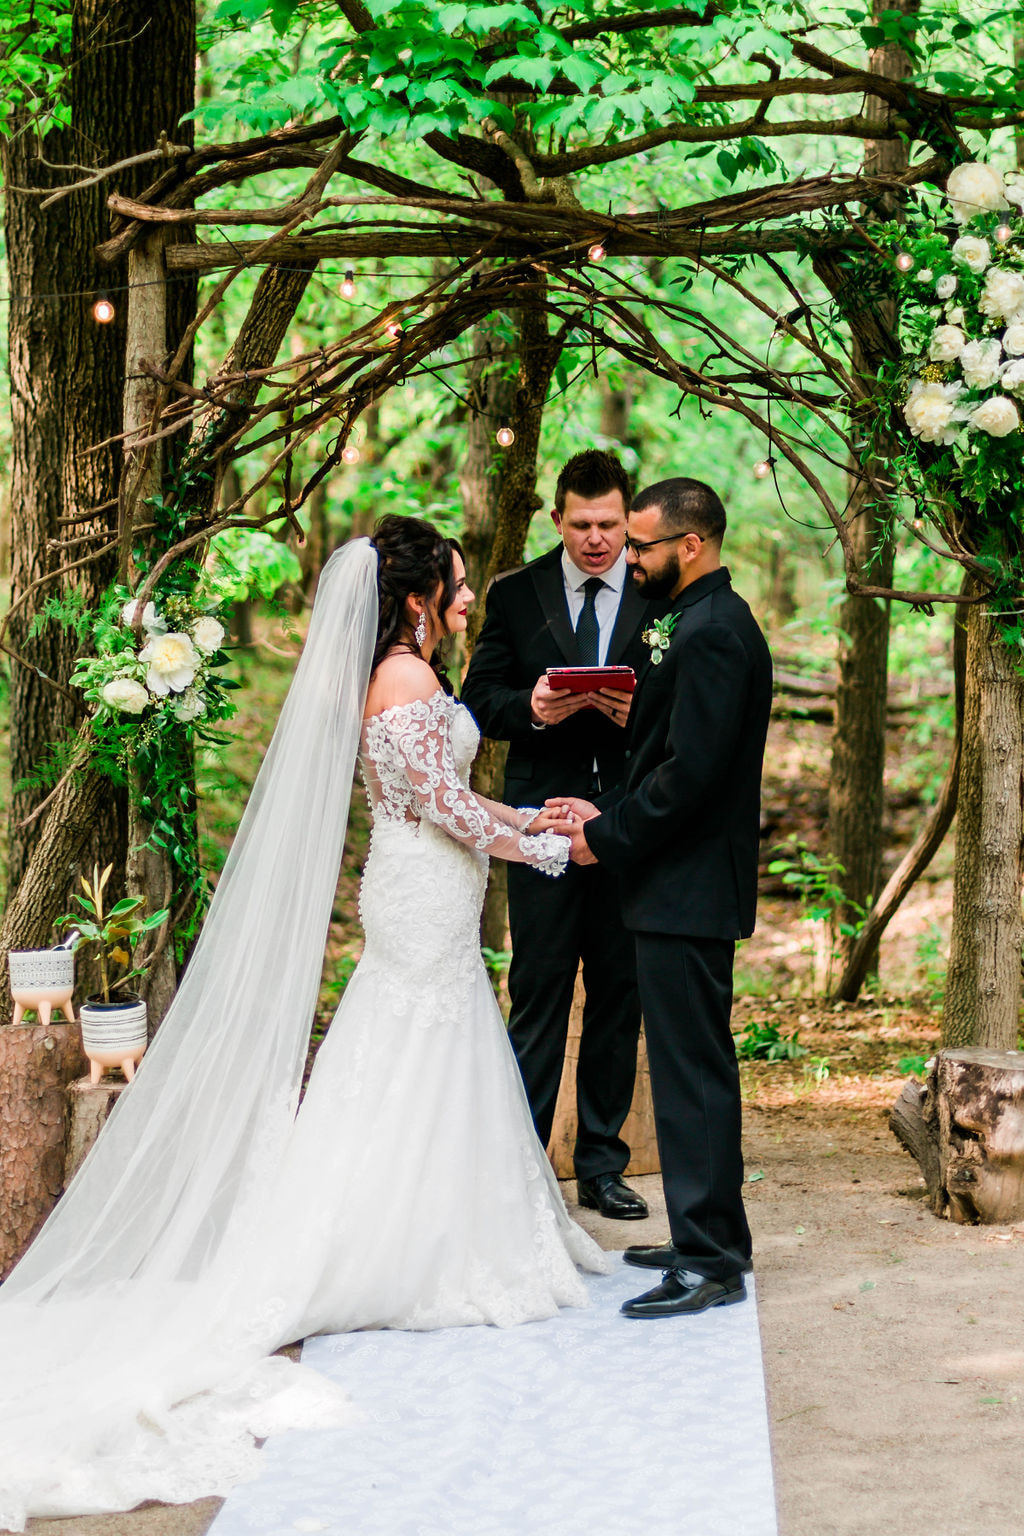 Pricing for Weddings | Dragonfly Wedding Venue IL - DRAGONFLY WEDDING VENUE